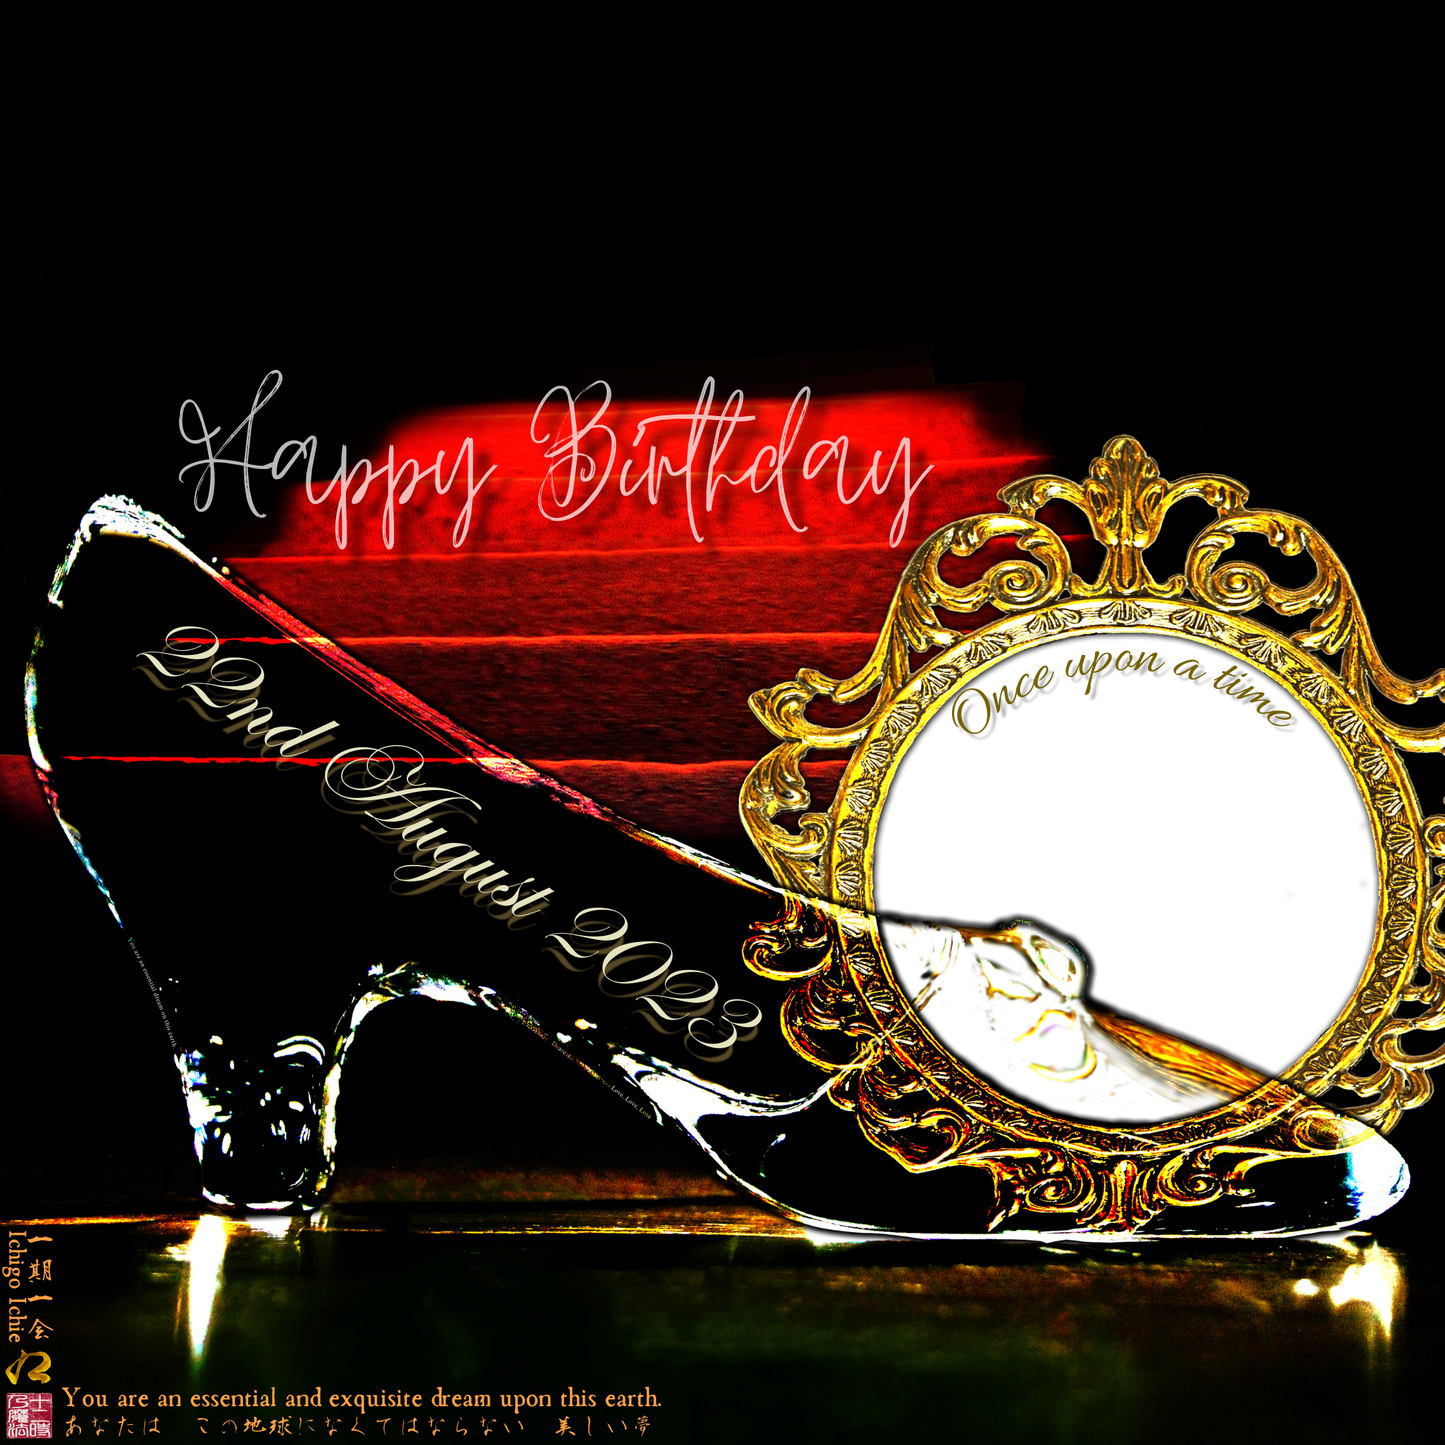 Happy Birthday Glass Slipper "Ichigo Ichie" 22nd August 2023 the Right (1-of-1) NFT Art